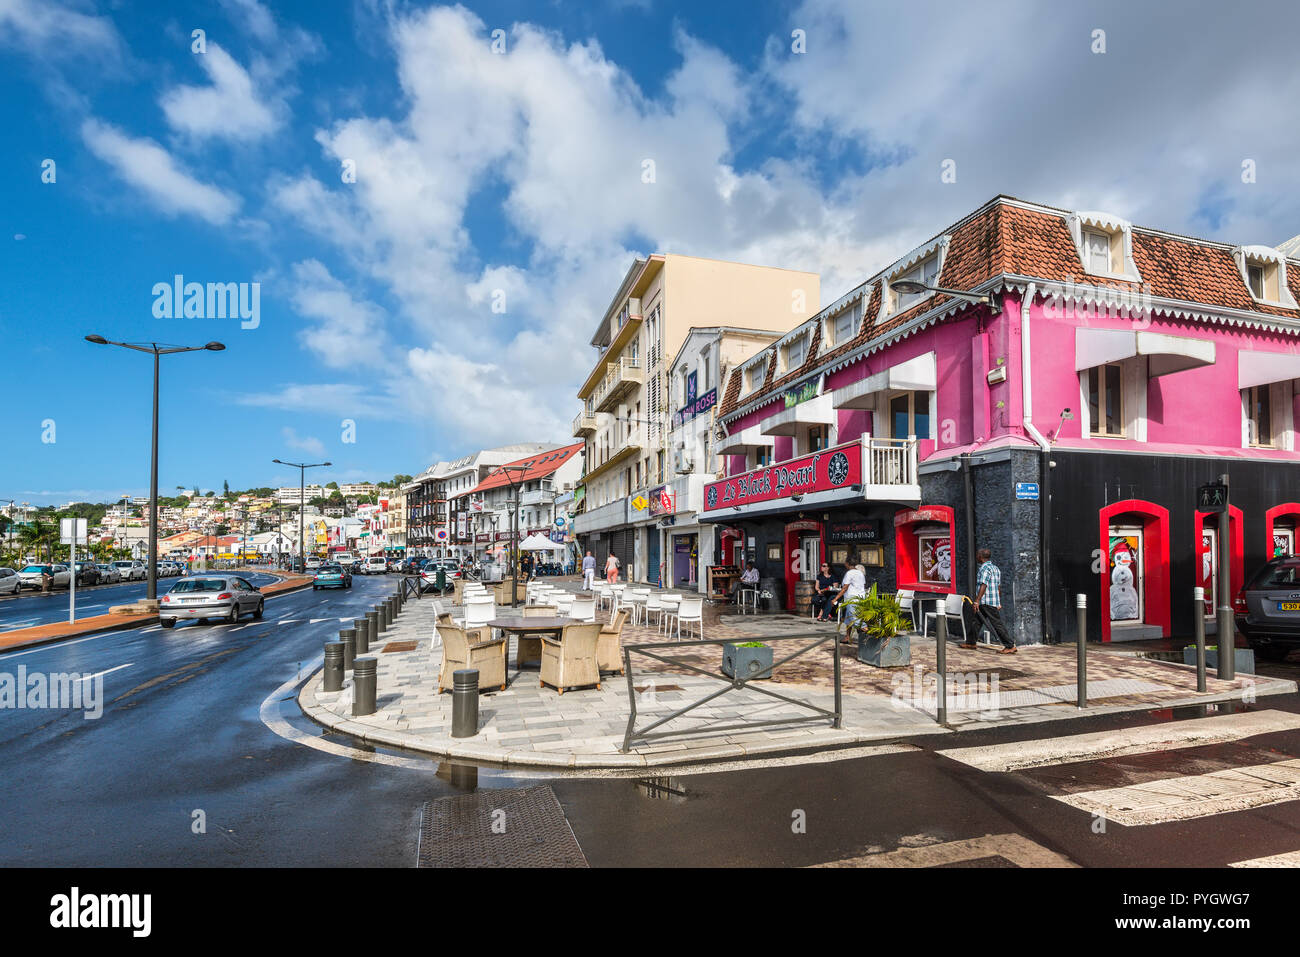 Fort-de-France, Martinique - December 19, 2016: The street life of Fort-de-France city in Martinique, Caribbean, Lesser Antilles. Martinique is an ins Stock Photo